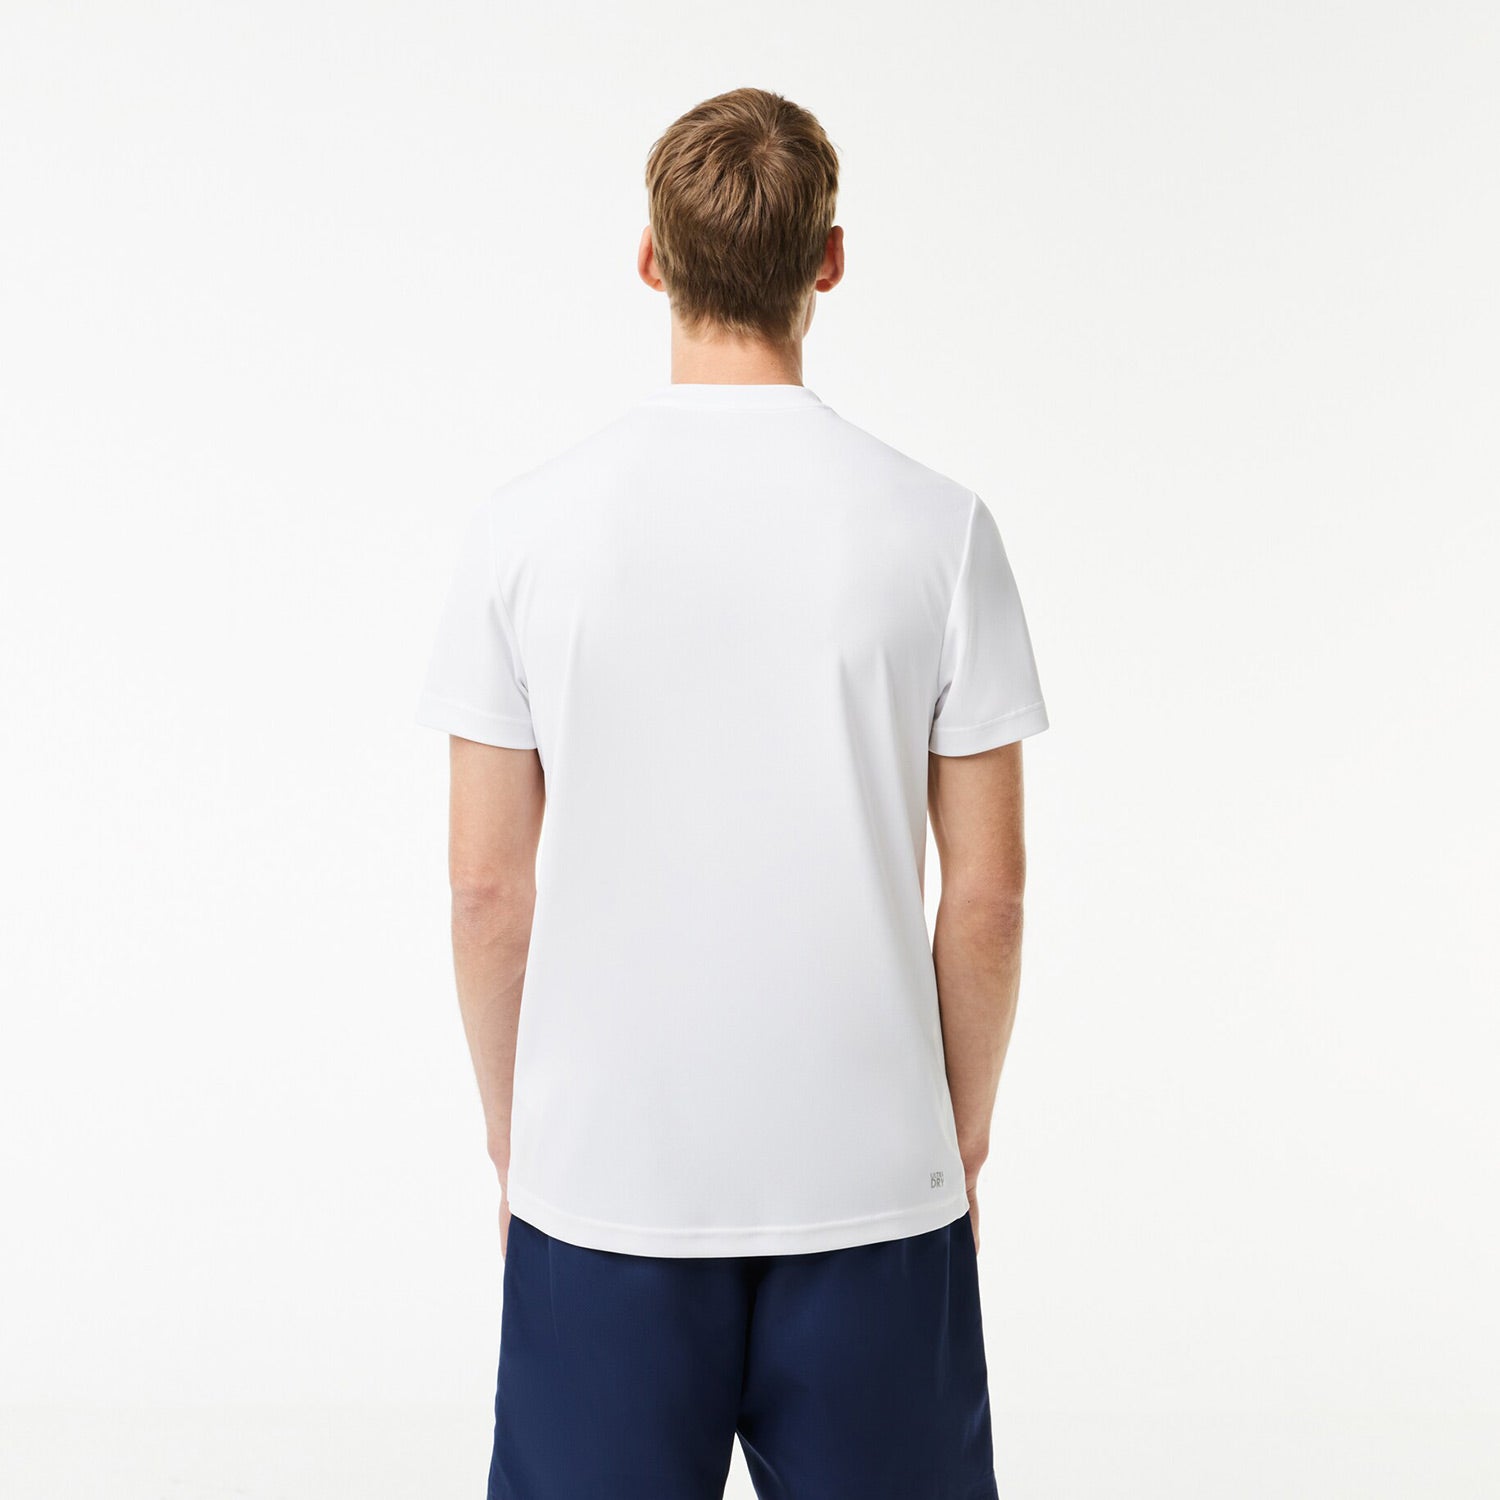 Lacoste Men's Ultra Dry Pique Tennis Shirt - White (2)